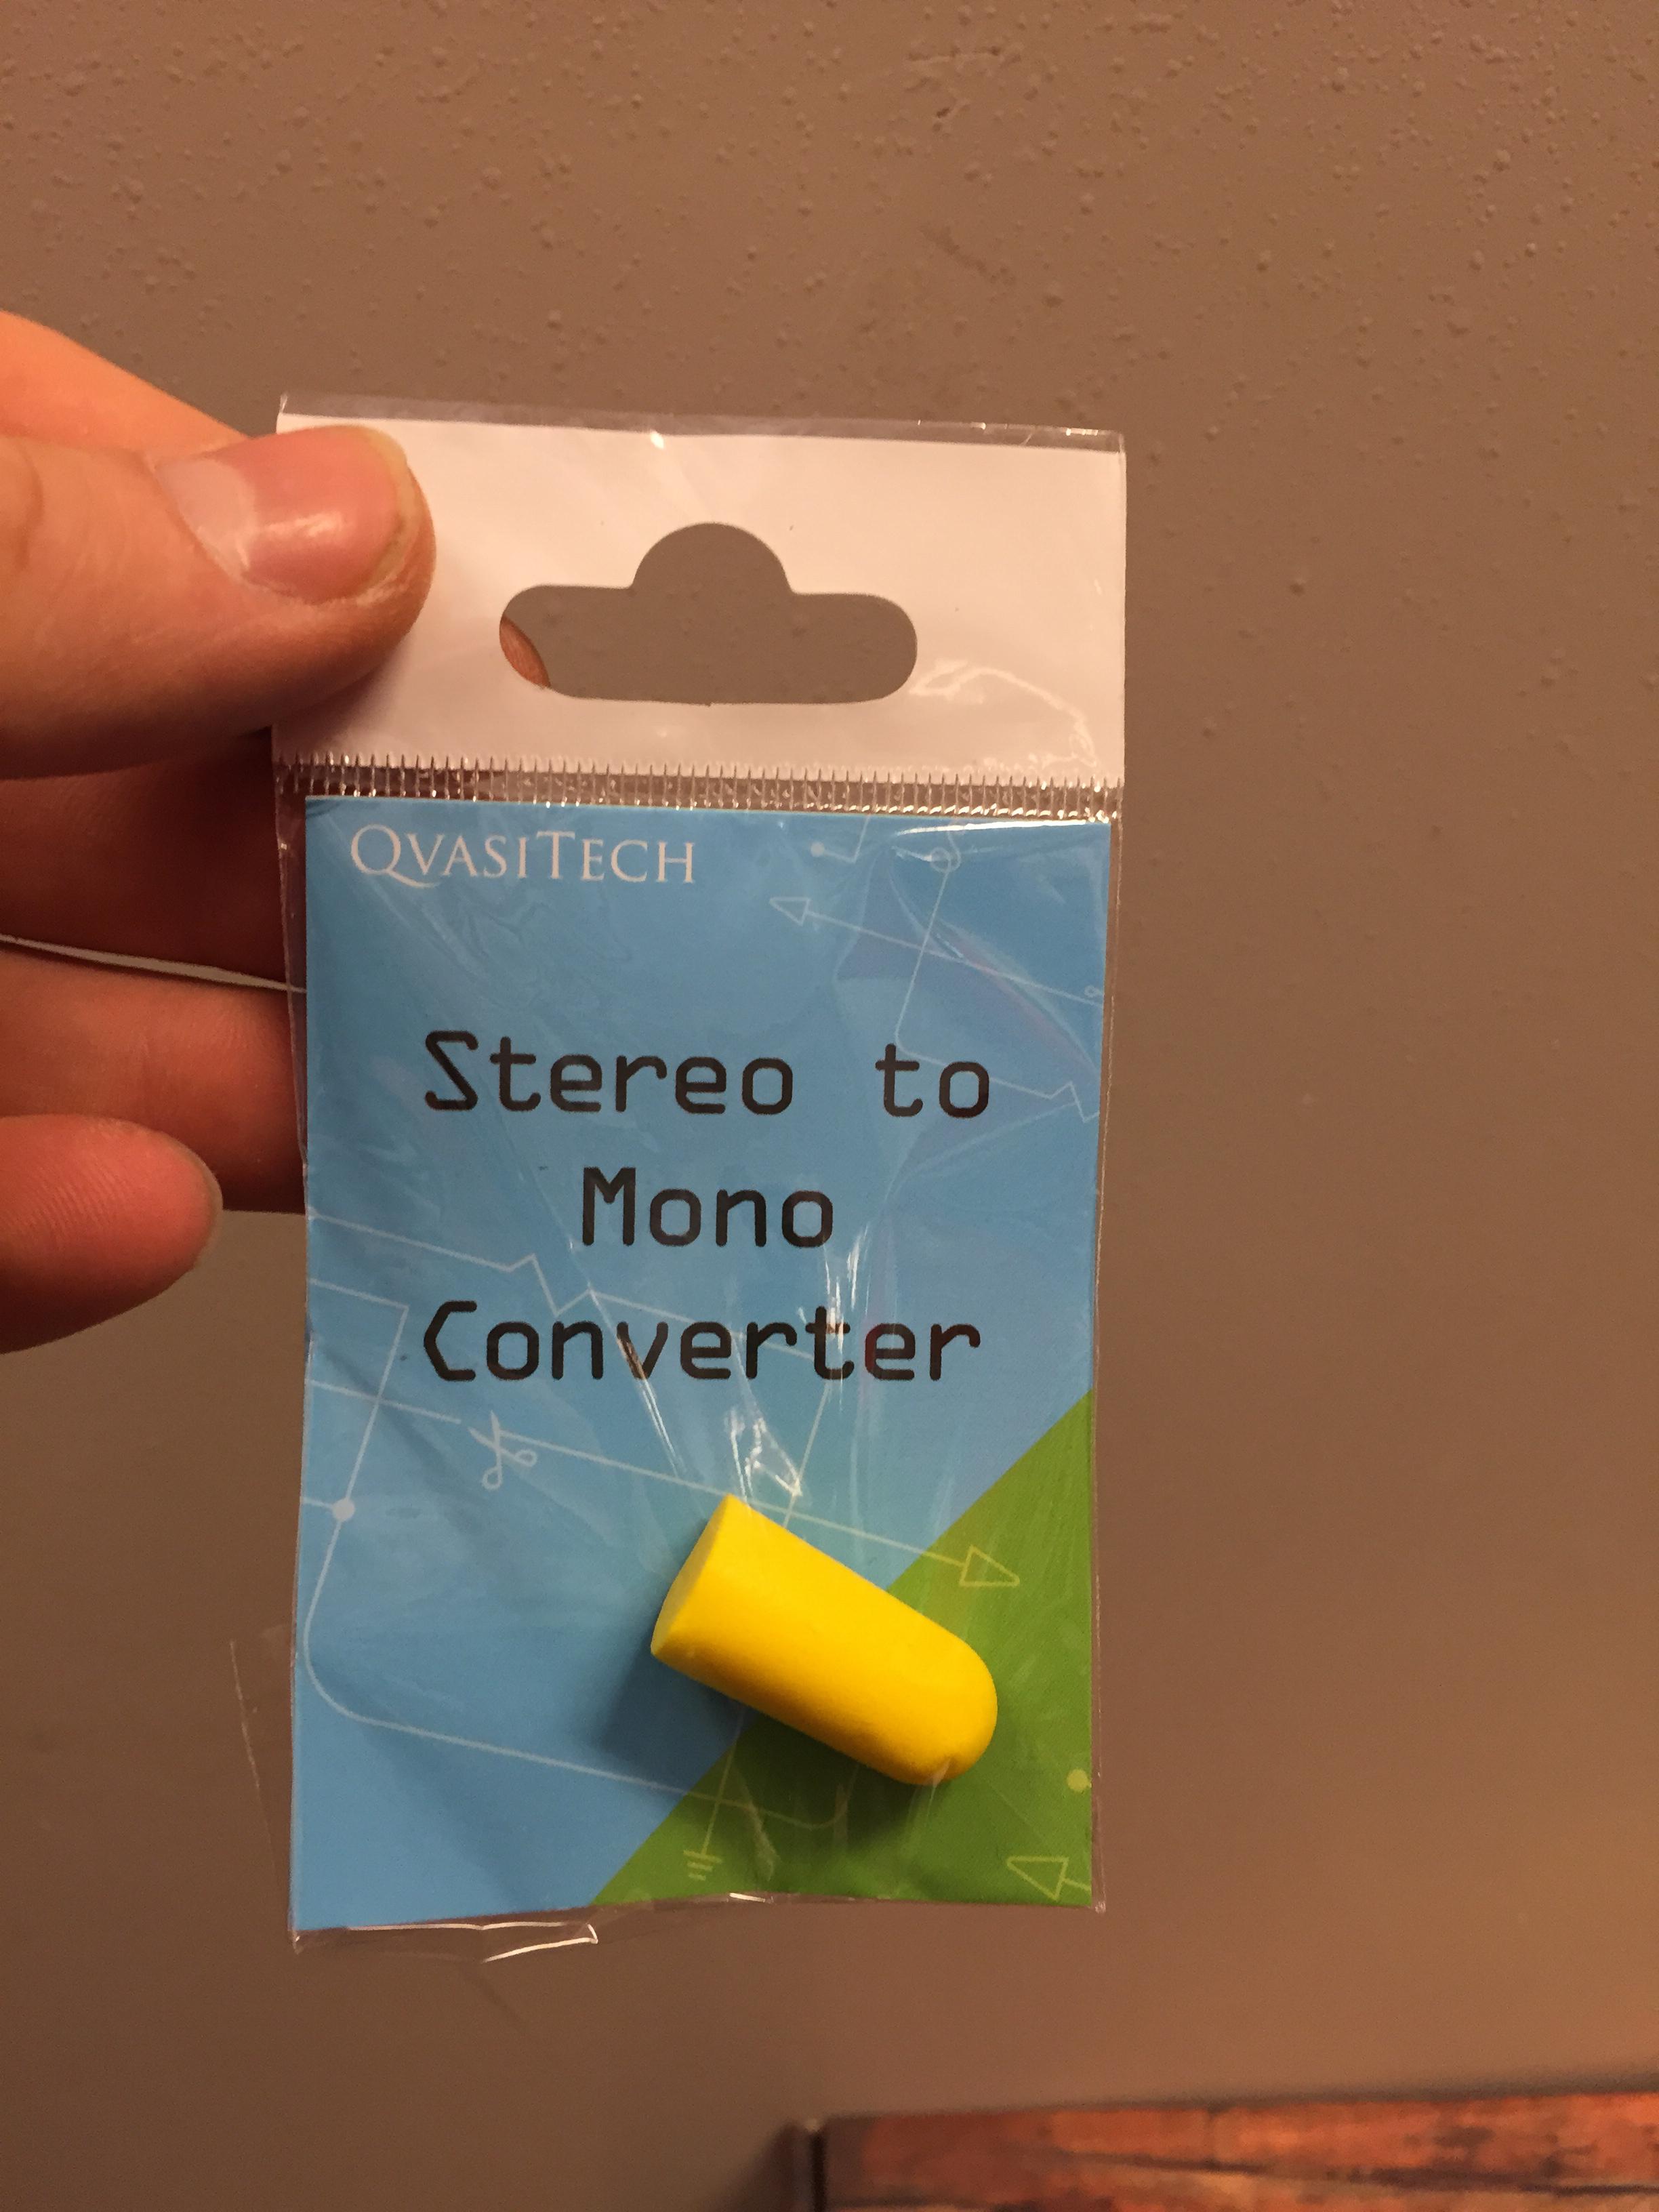 stereo to mono converter - Qvasitech Stereo to Mono Converter